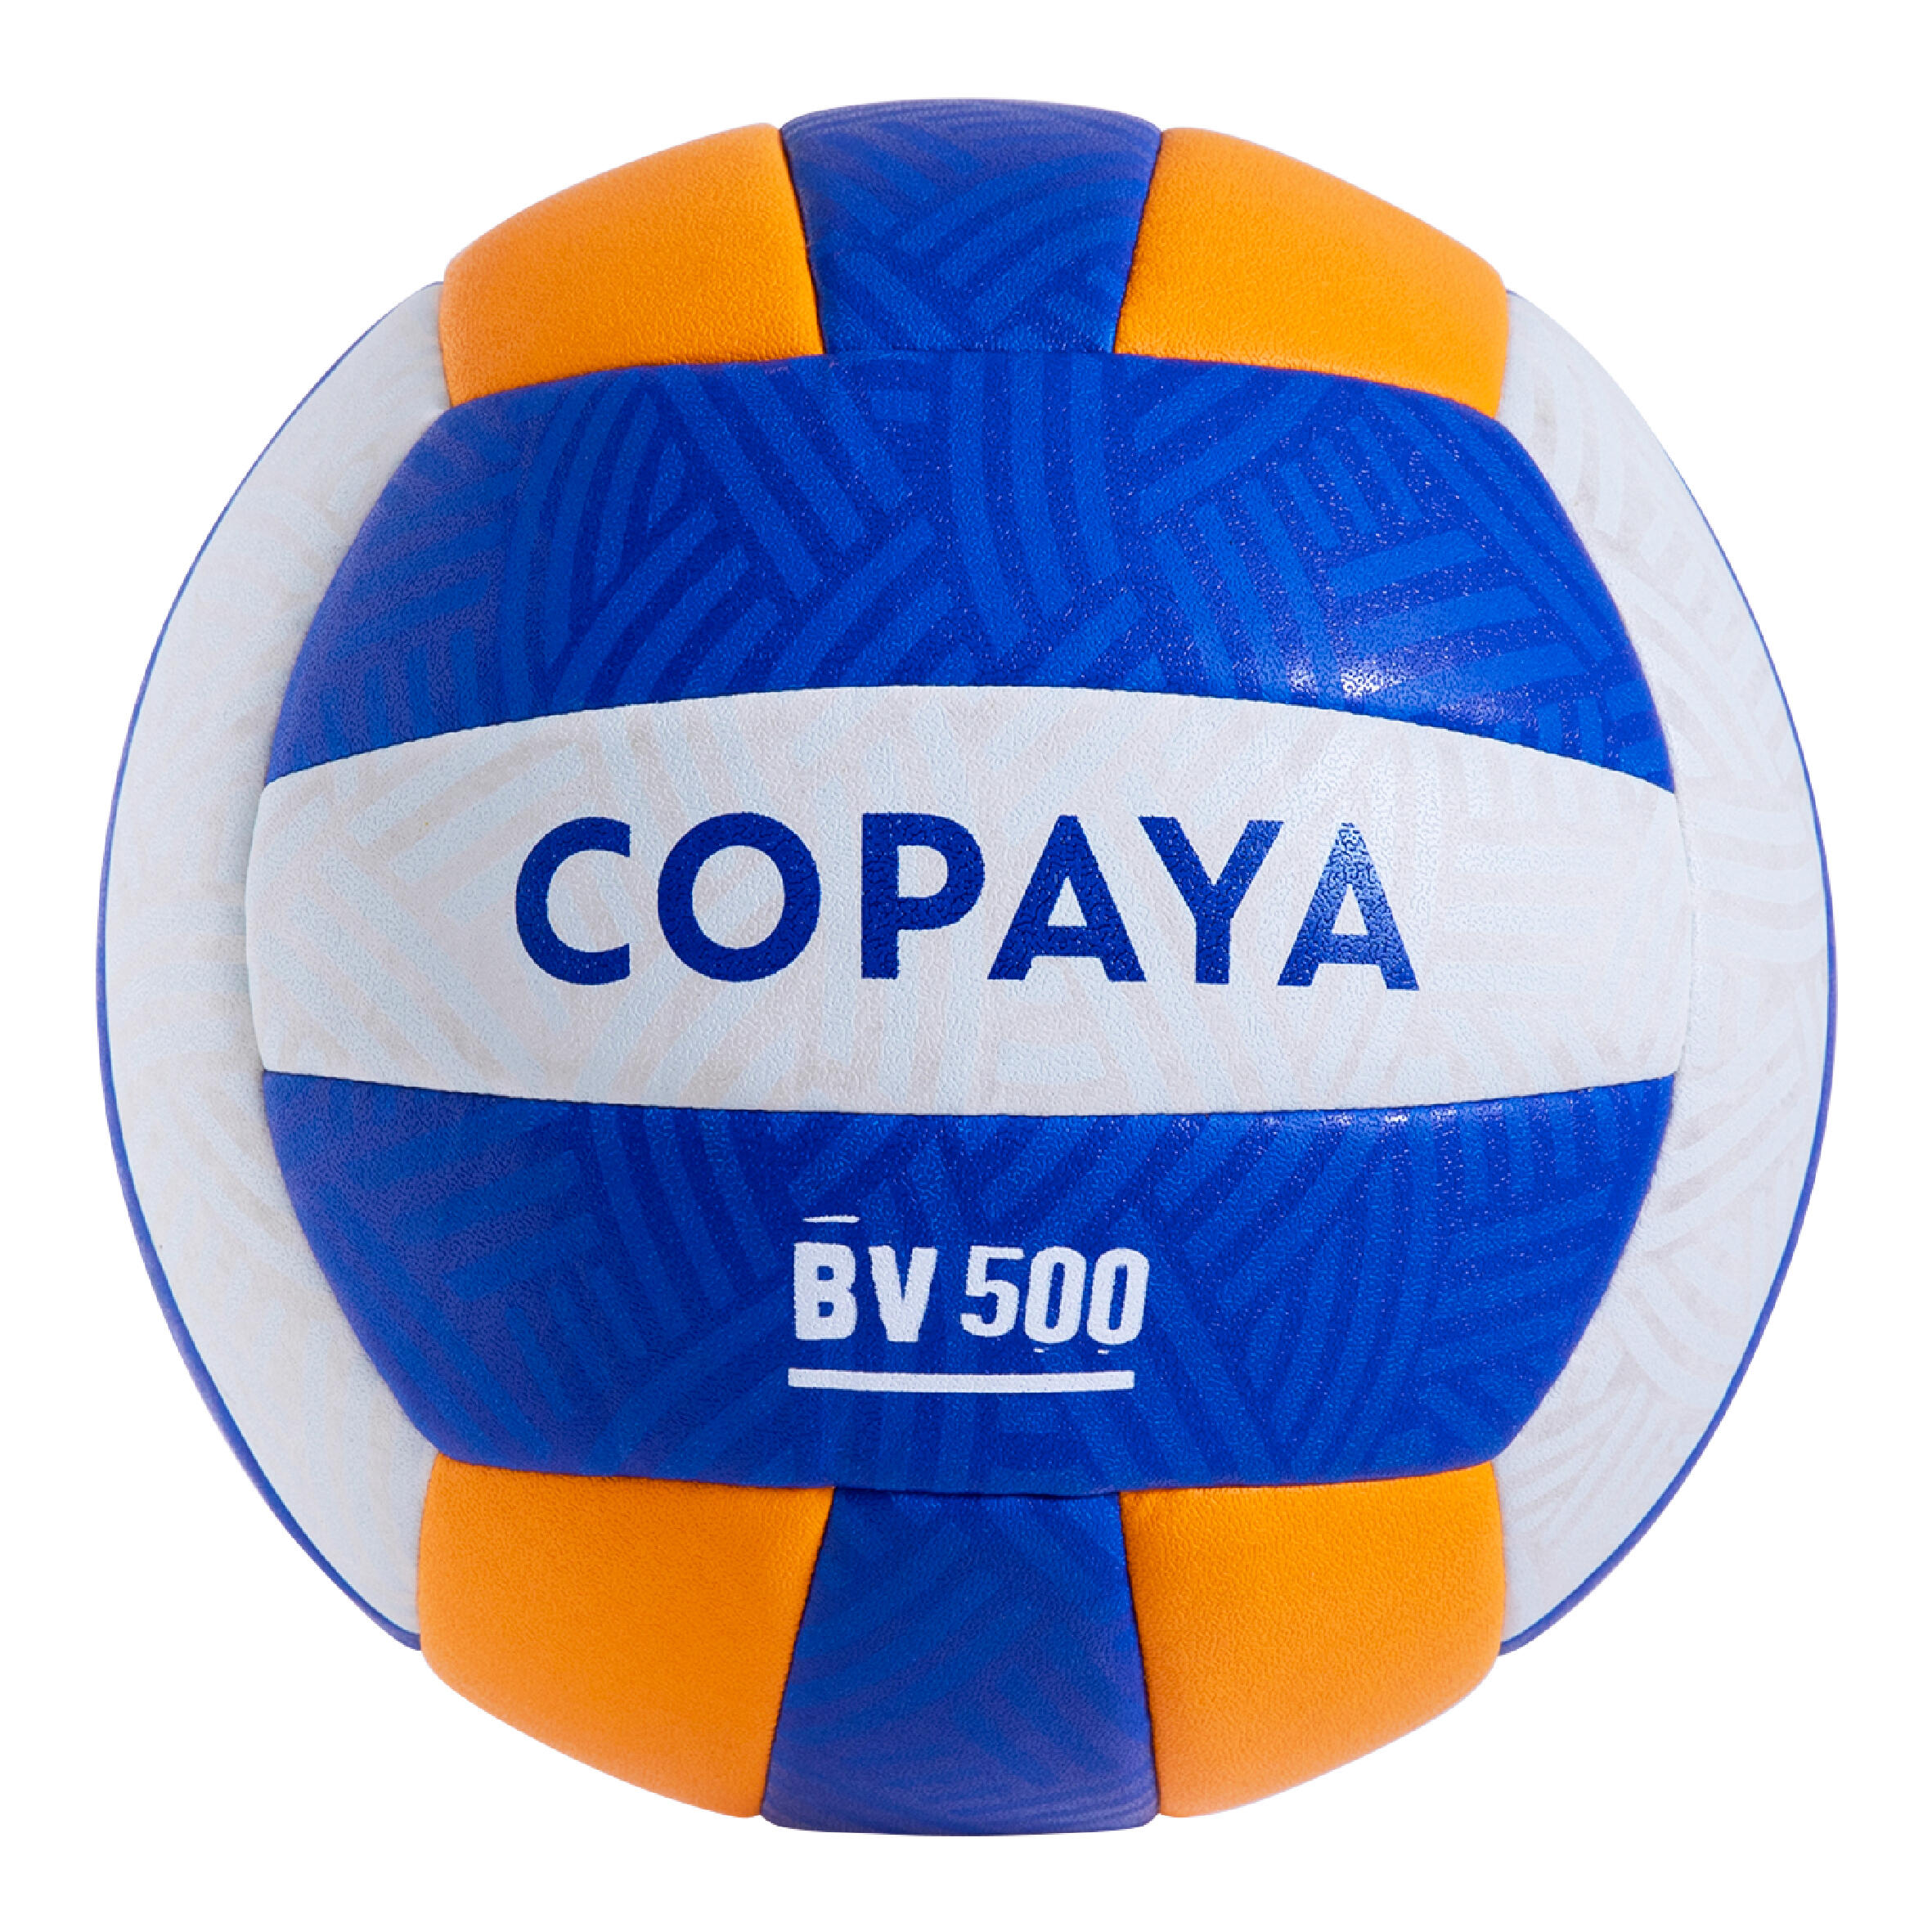 COPAYA Beach Volleyball BVBH500 - Yellow